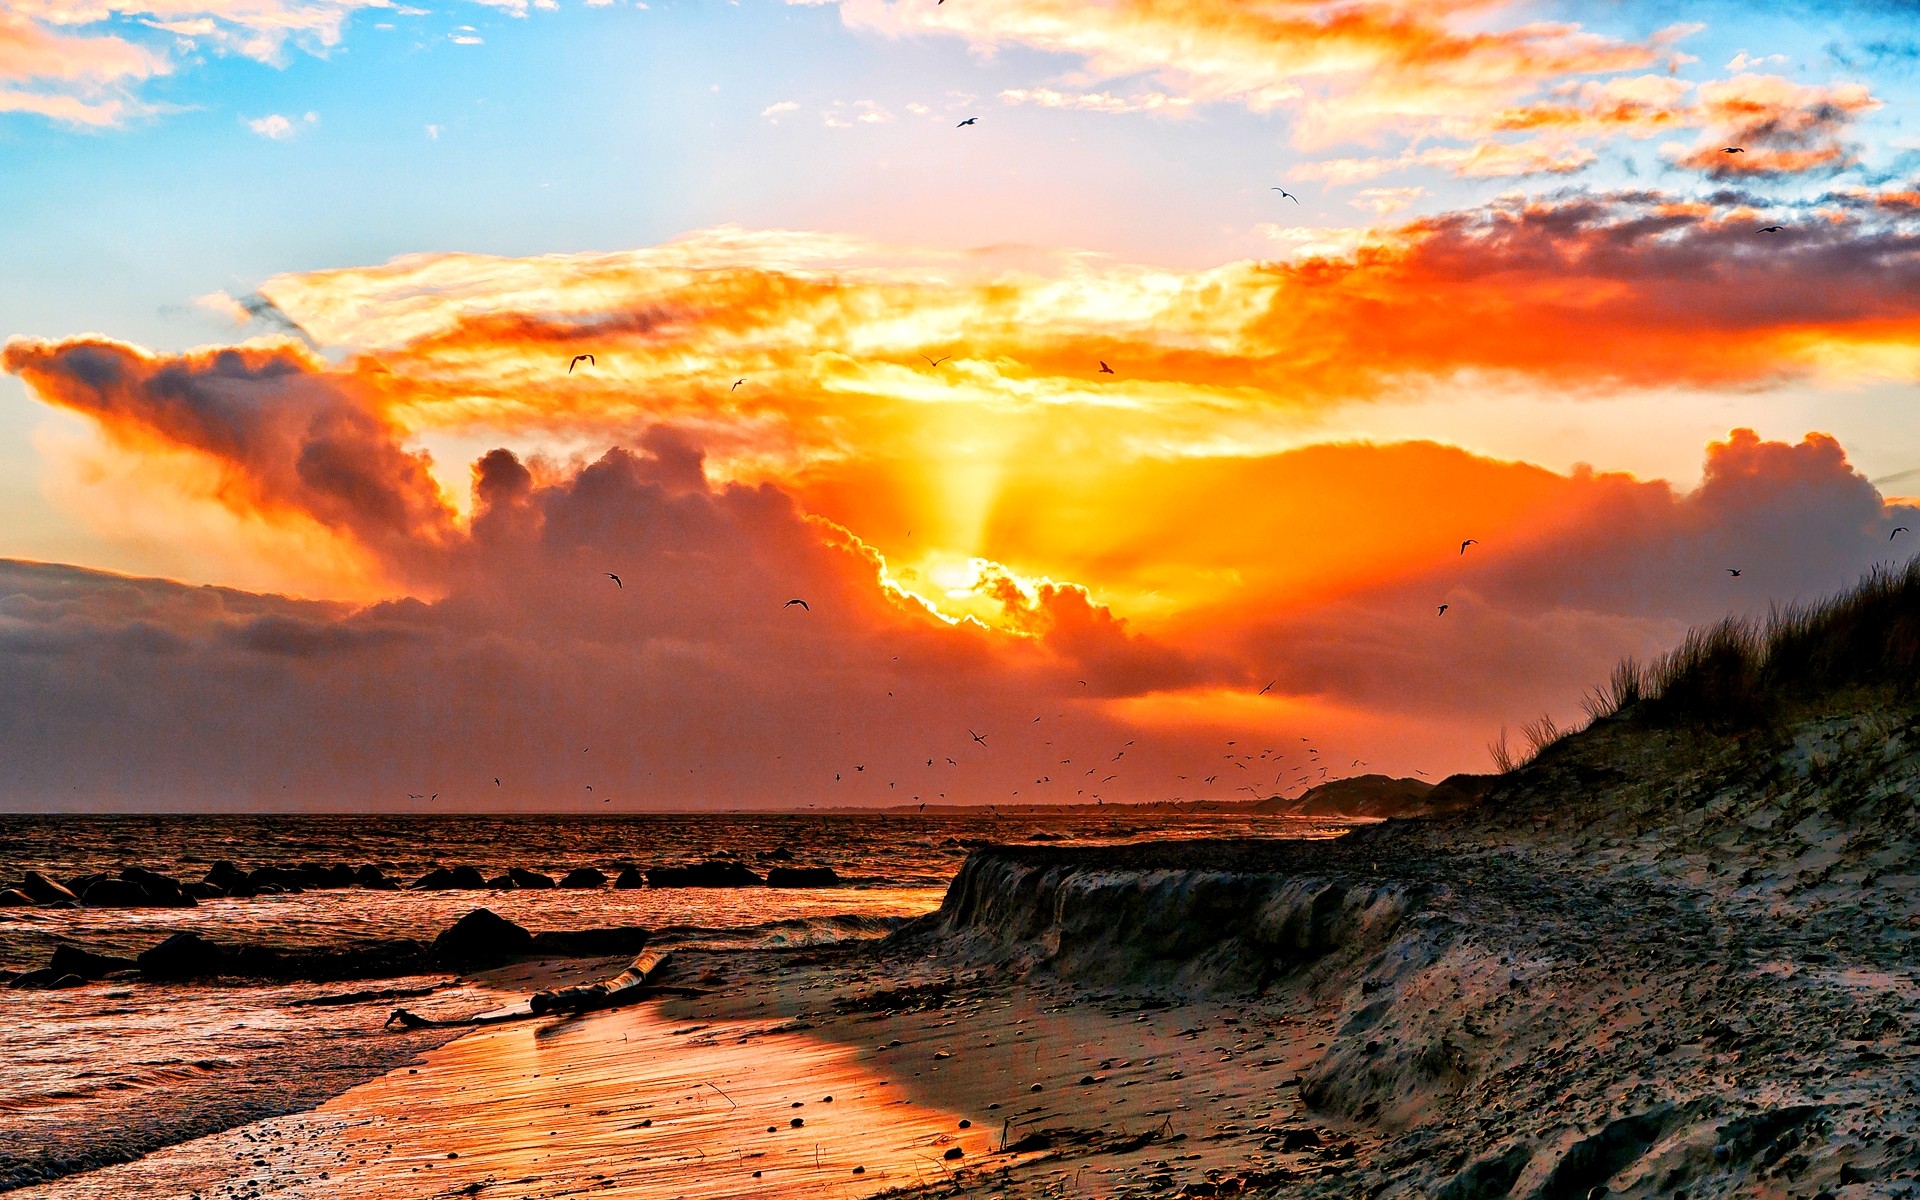 Sunset: SUNSET SCENE Clouds Seagulls Sky Beach Shore Sun Surfing ...